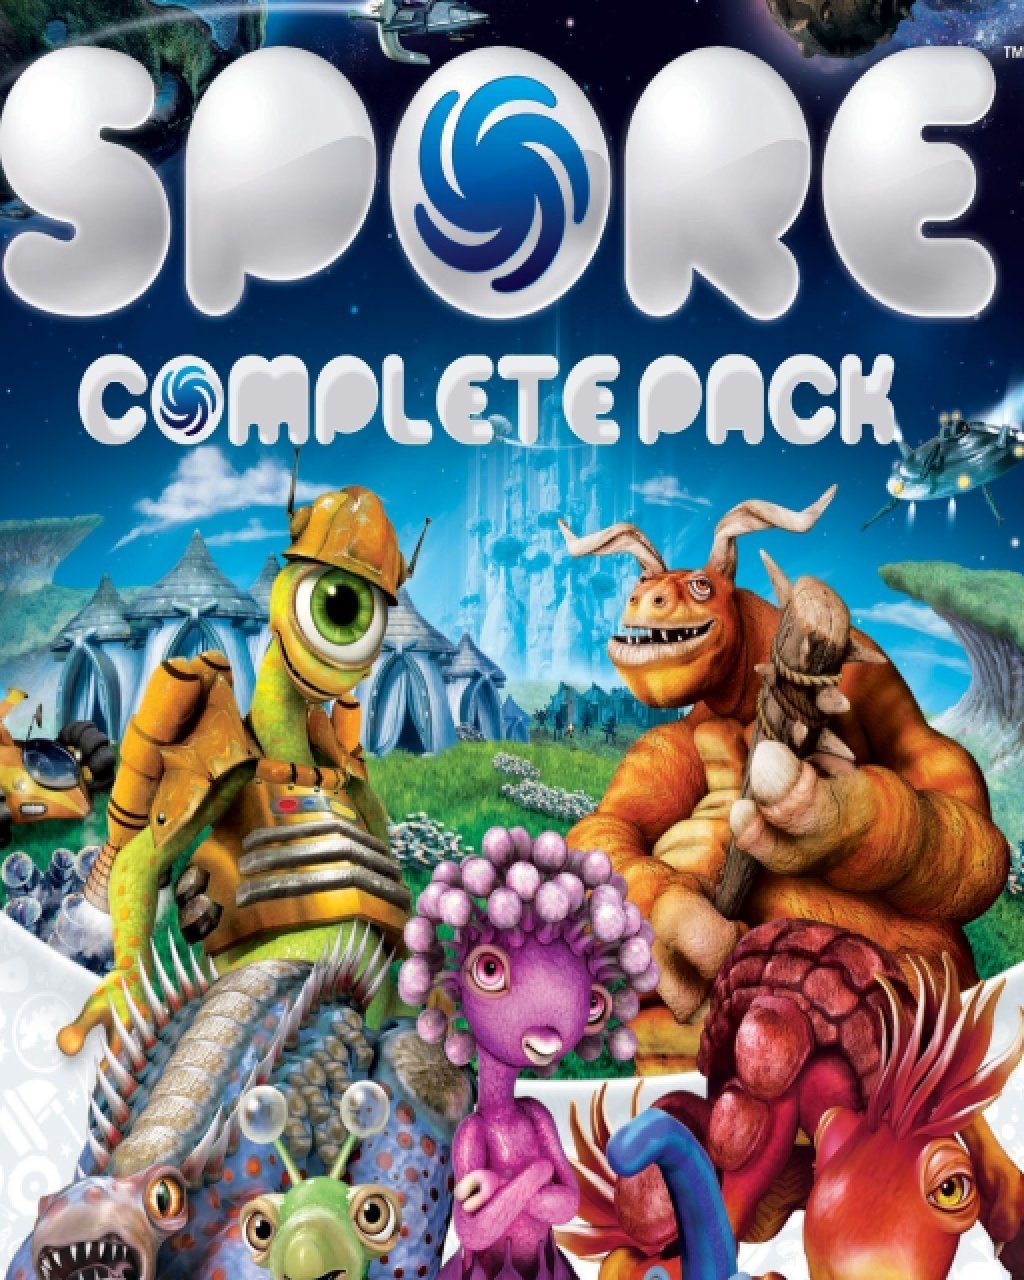 SPORE Complete Pack (PC DIGITAL)